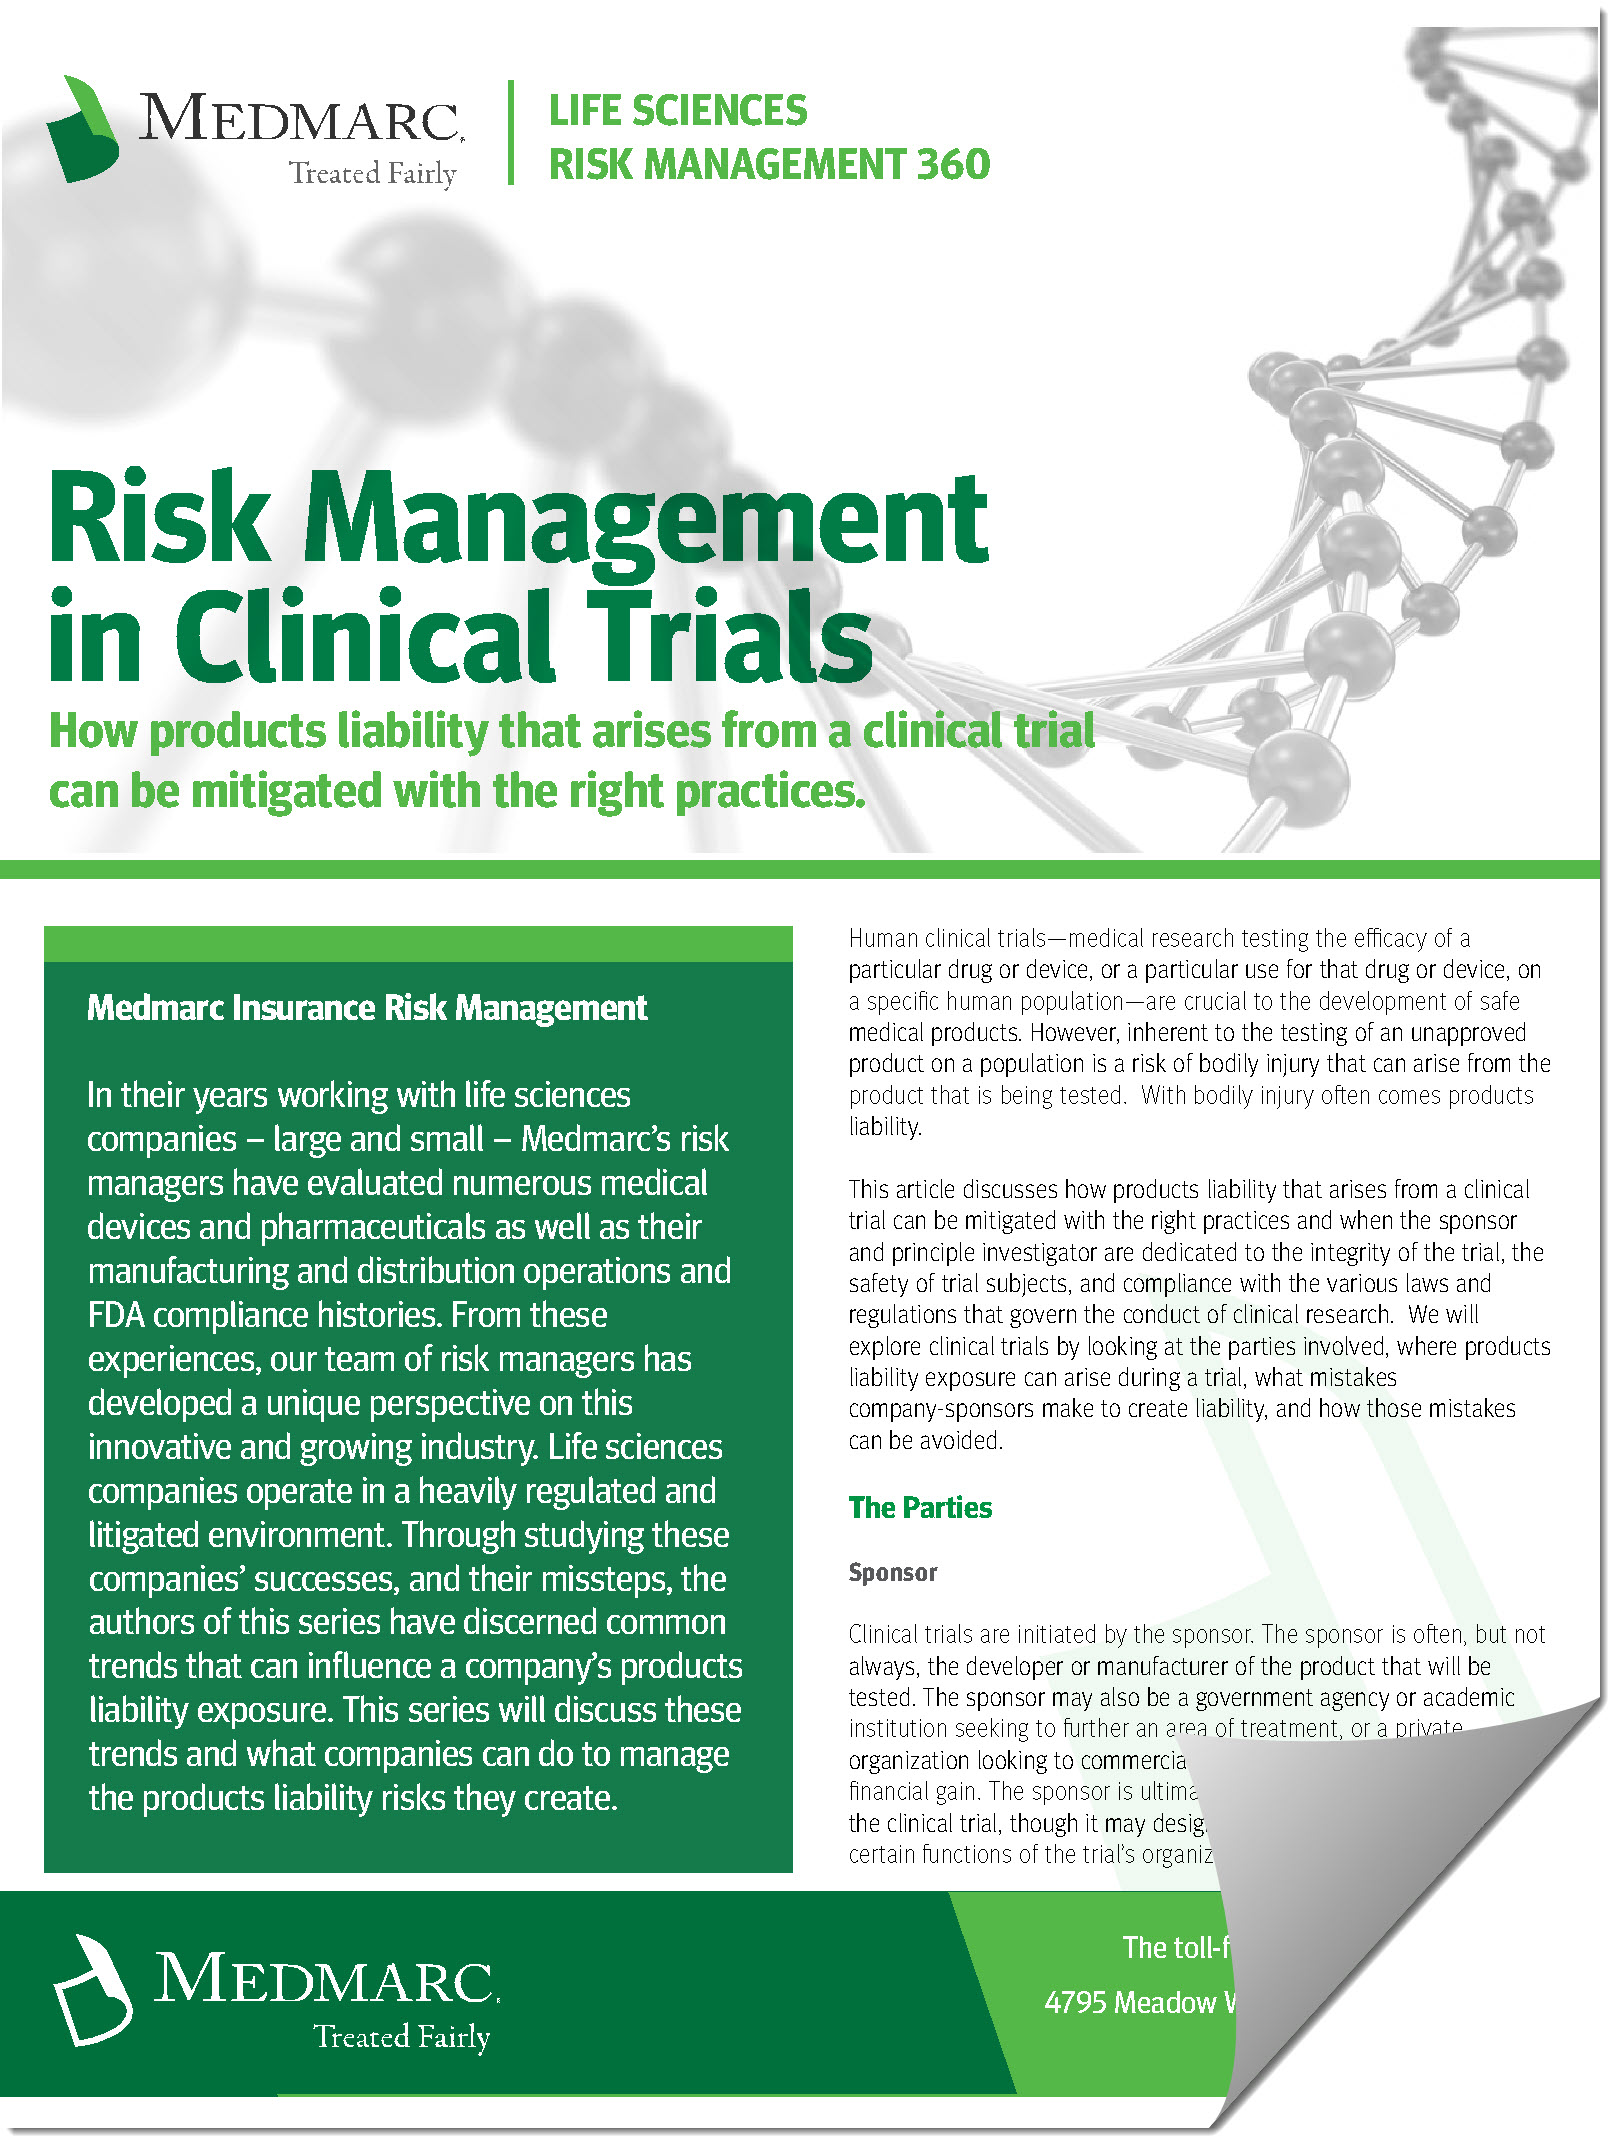 Risk Management 360 - Risk Management in Clinical Trials